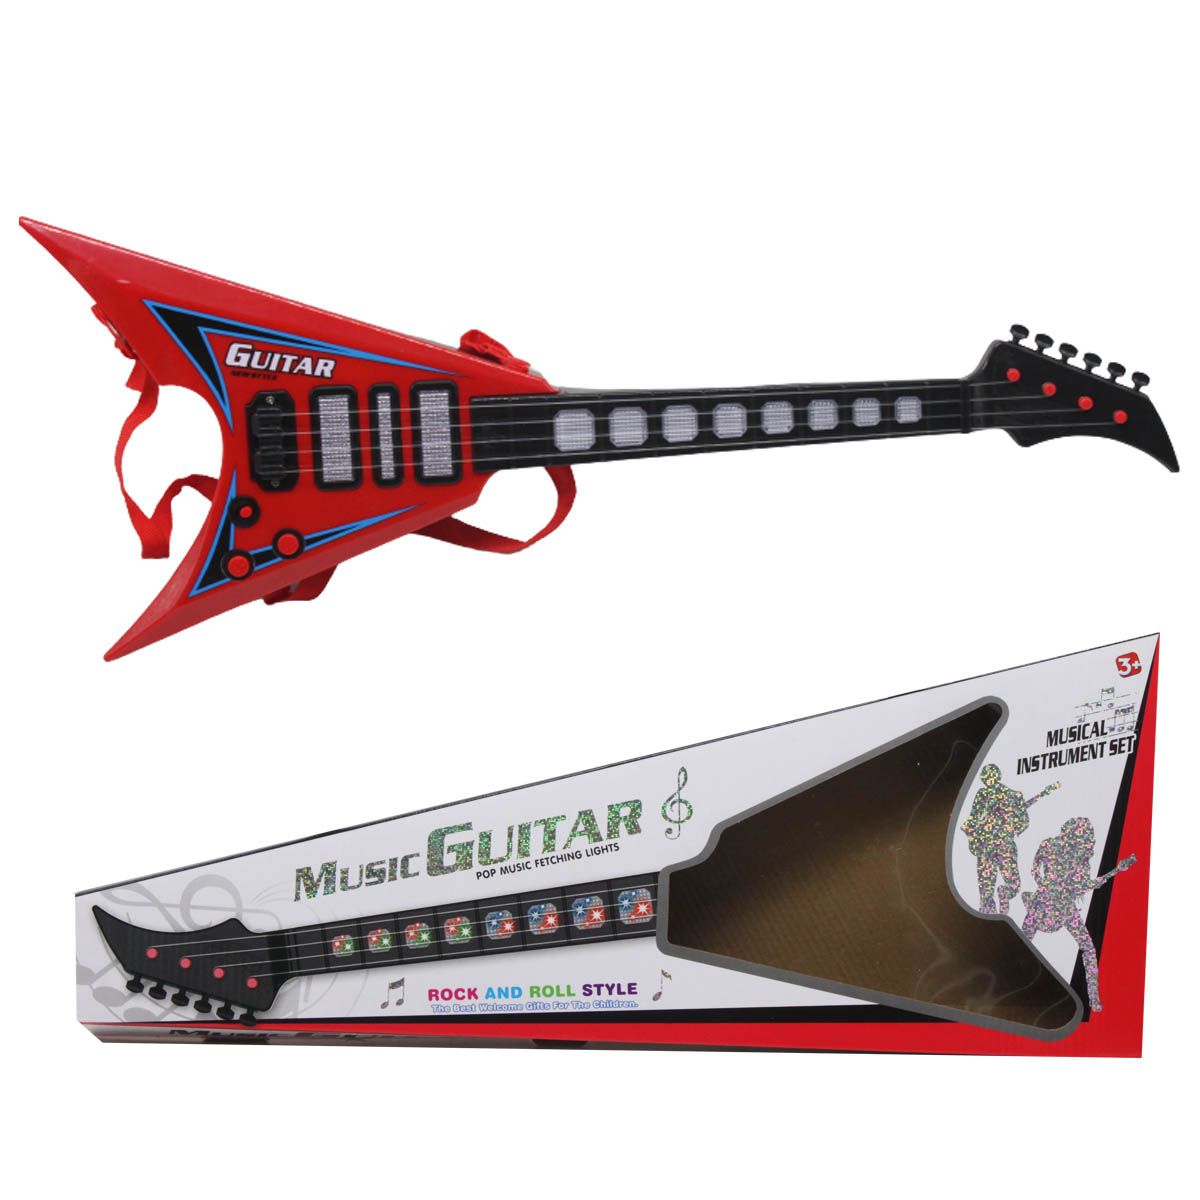 Іграшка музична "Music Guitar", червона